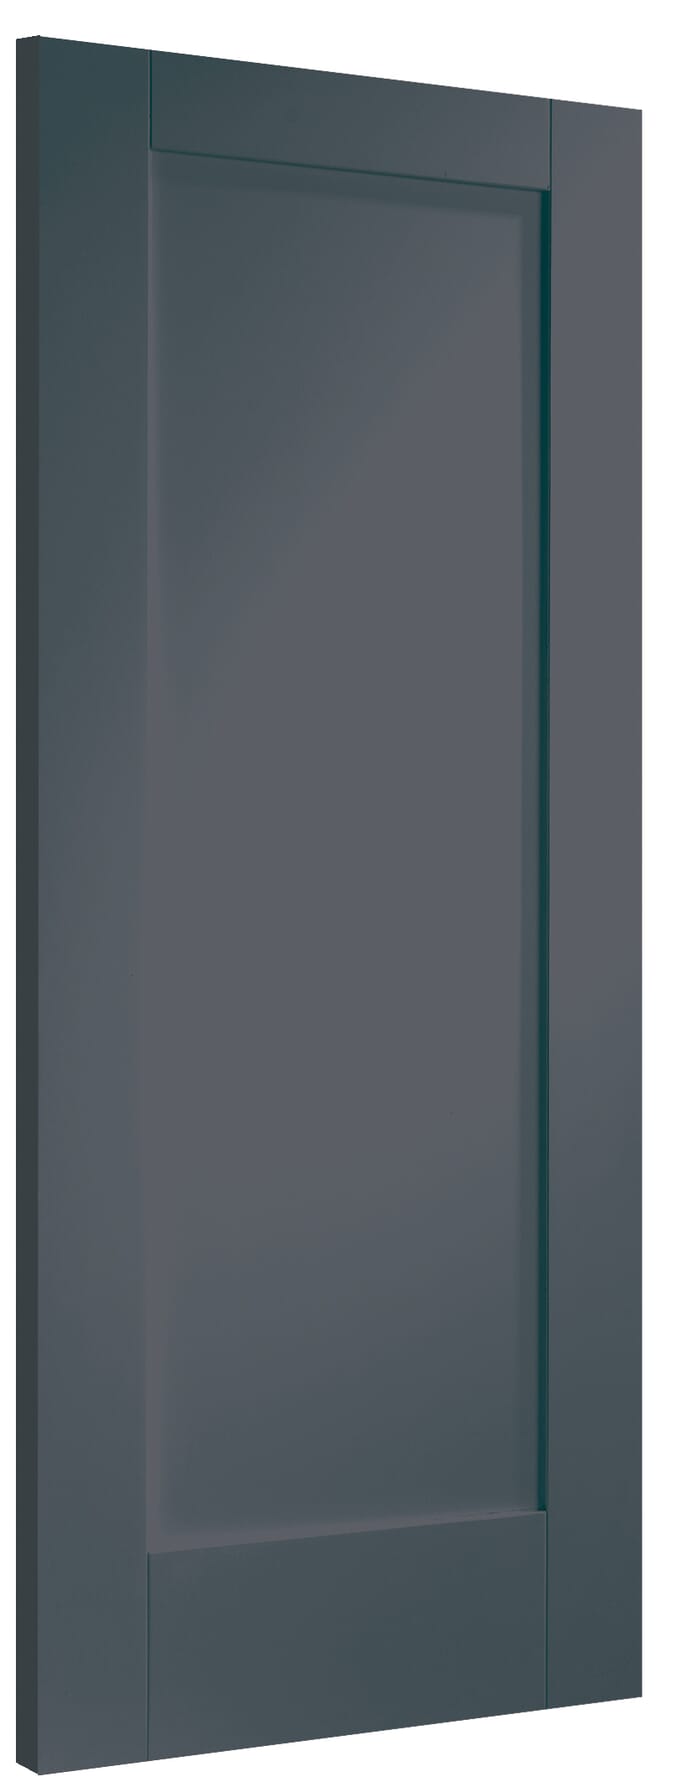 762x1981x35mm (30") Pattern 10 Cinder Grey Internal Doors